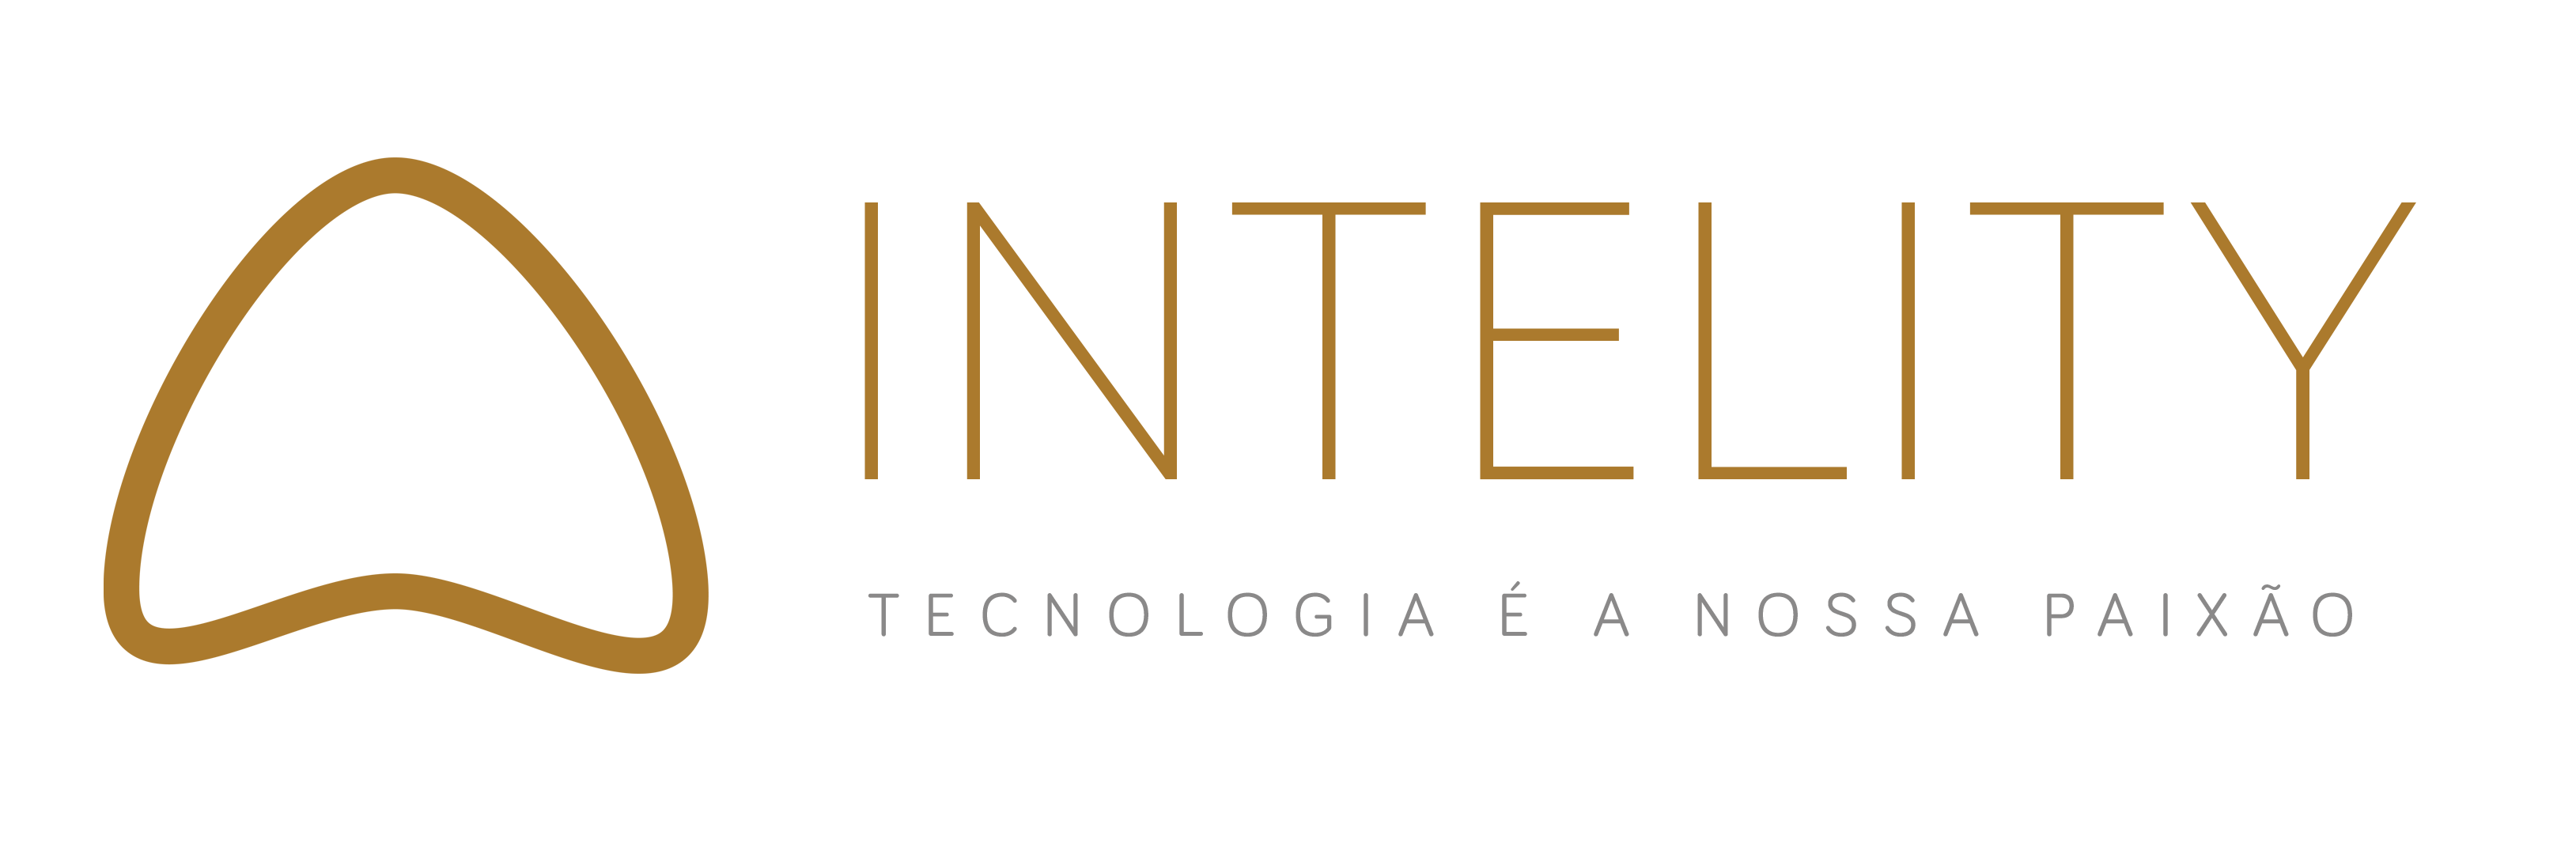 Intelity logotipo